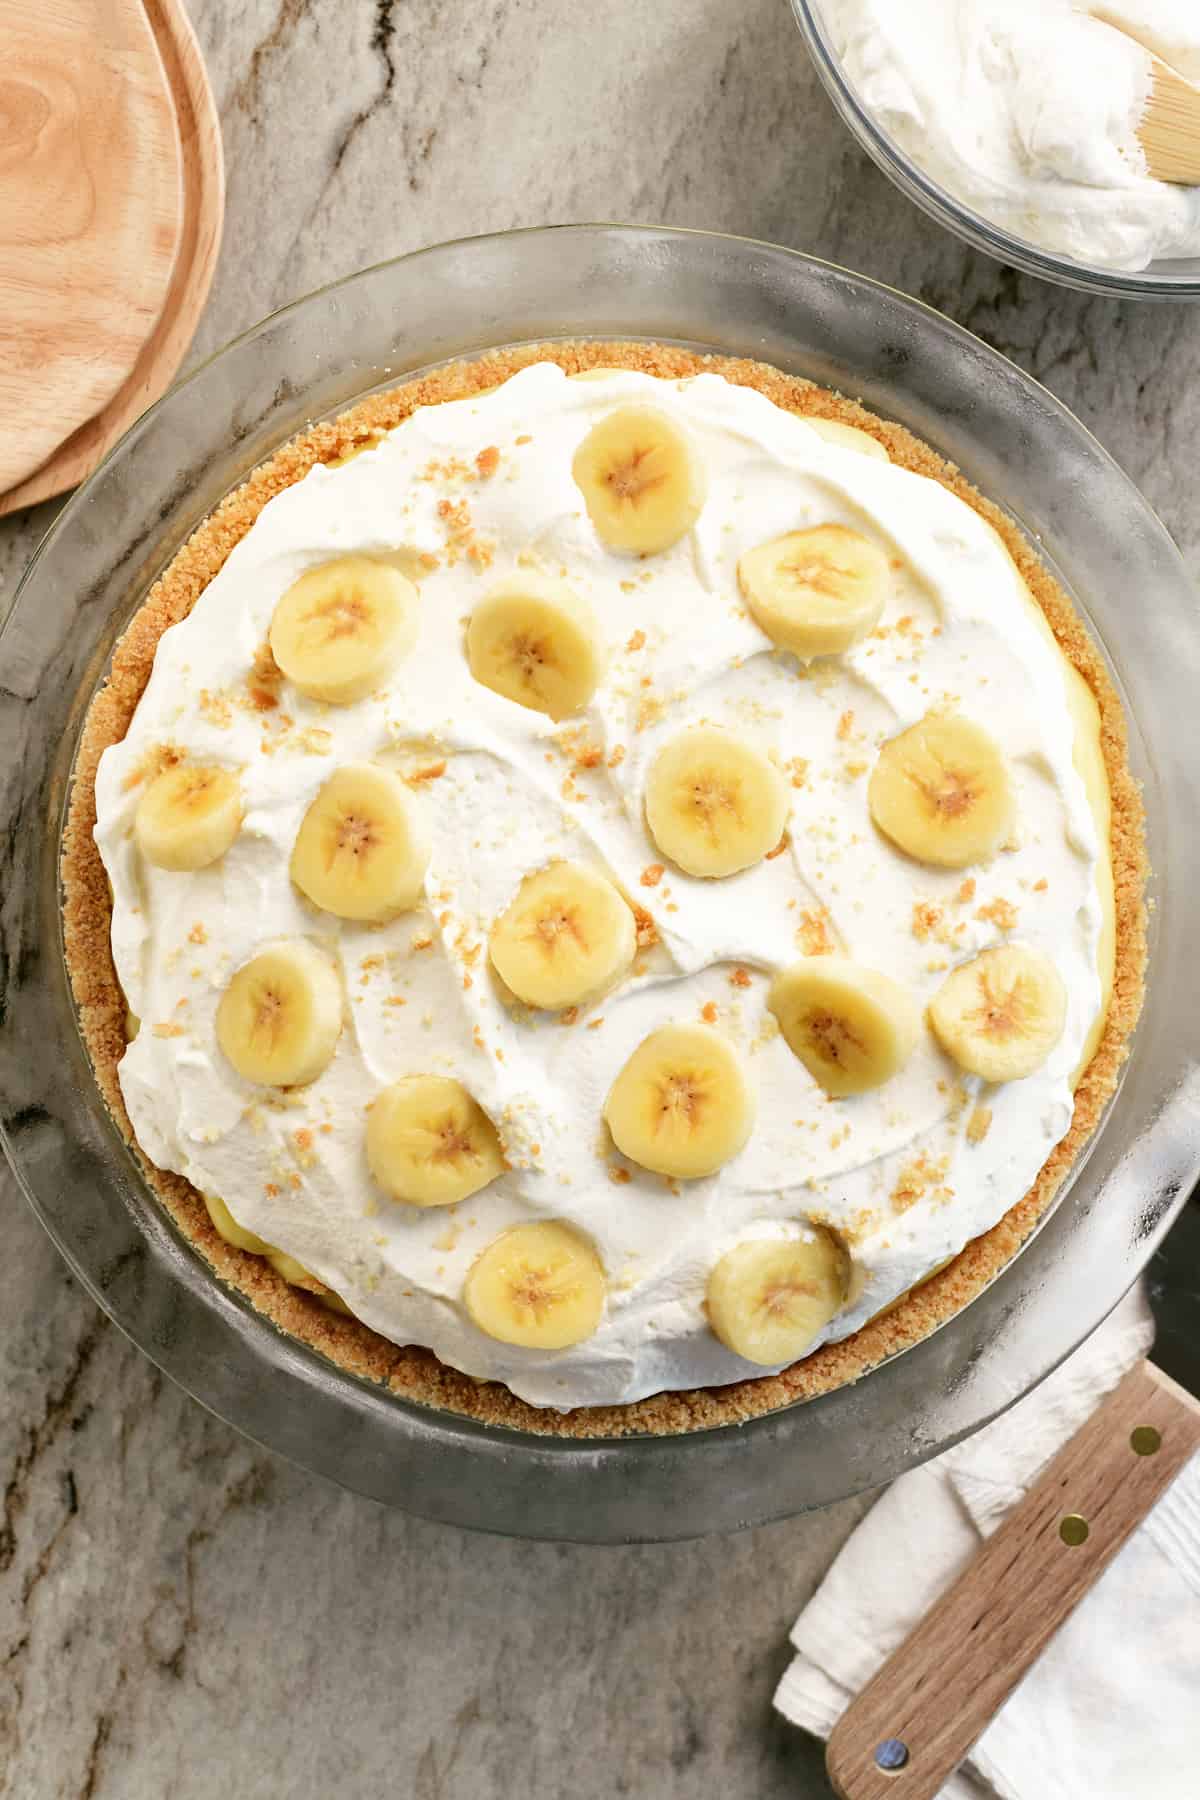 Banana cream pie with whipped cream on top.